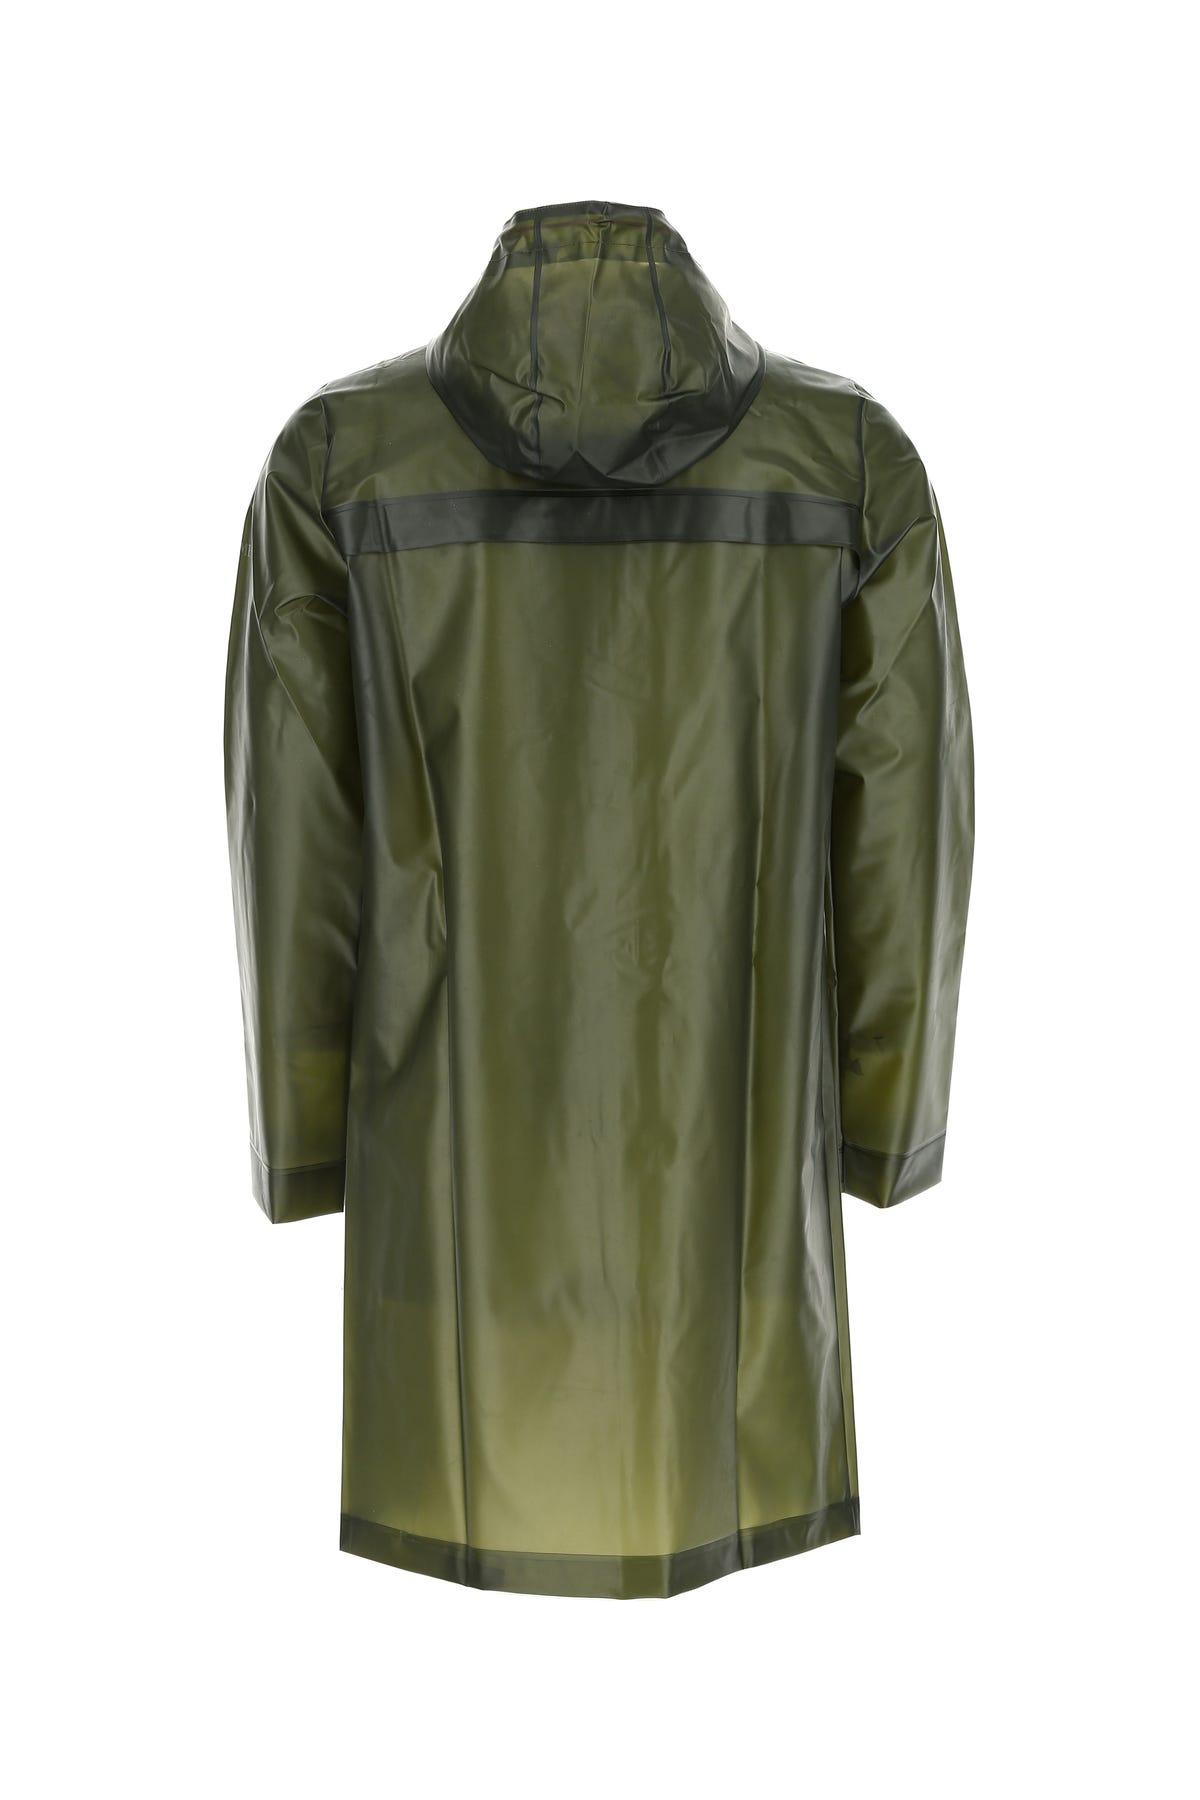 Saint James Dark Green Polyurethane Raincoat for Men - Lyst